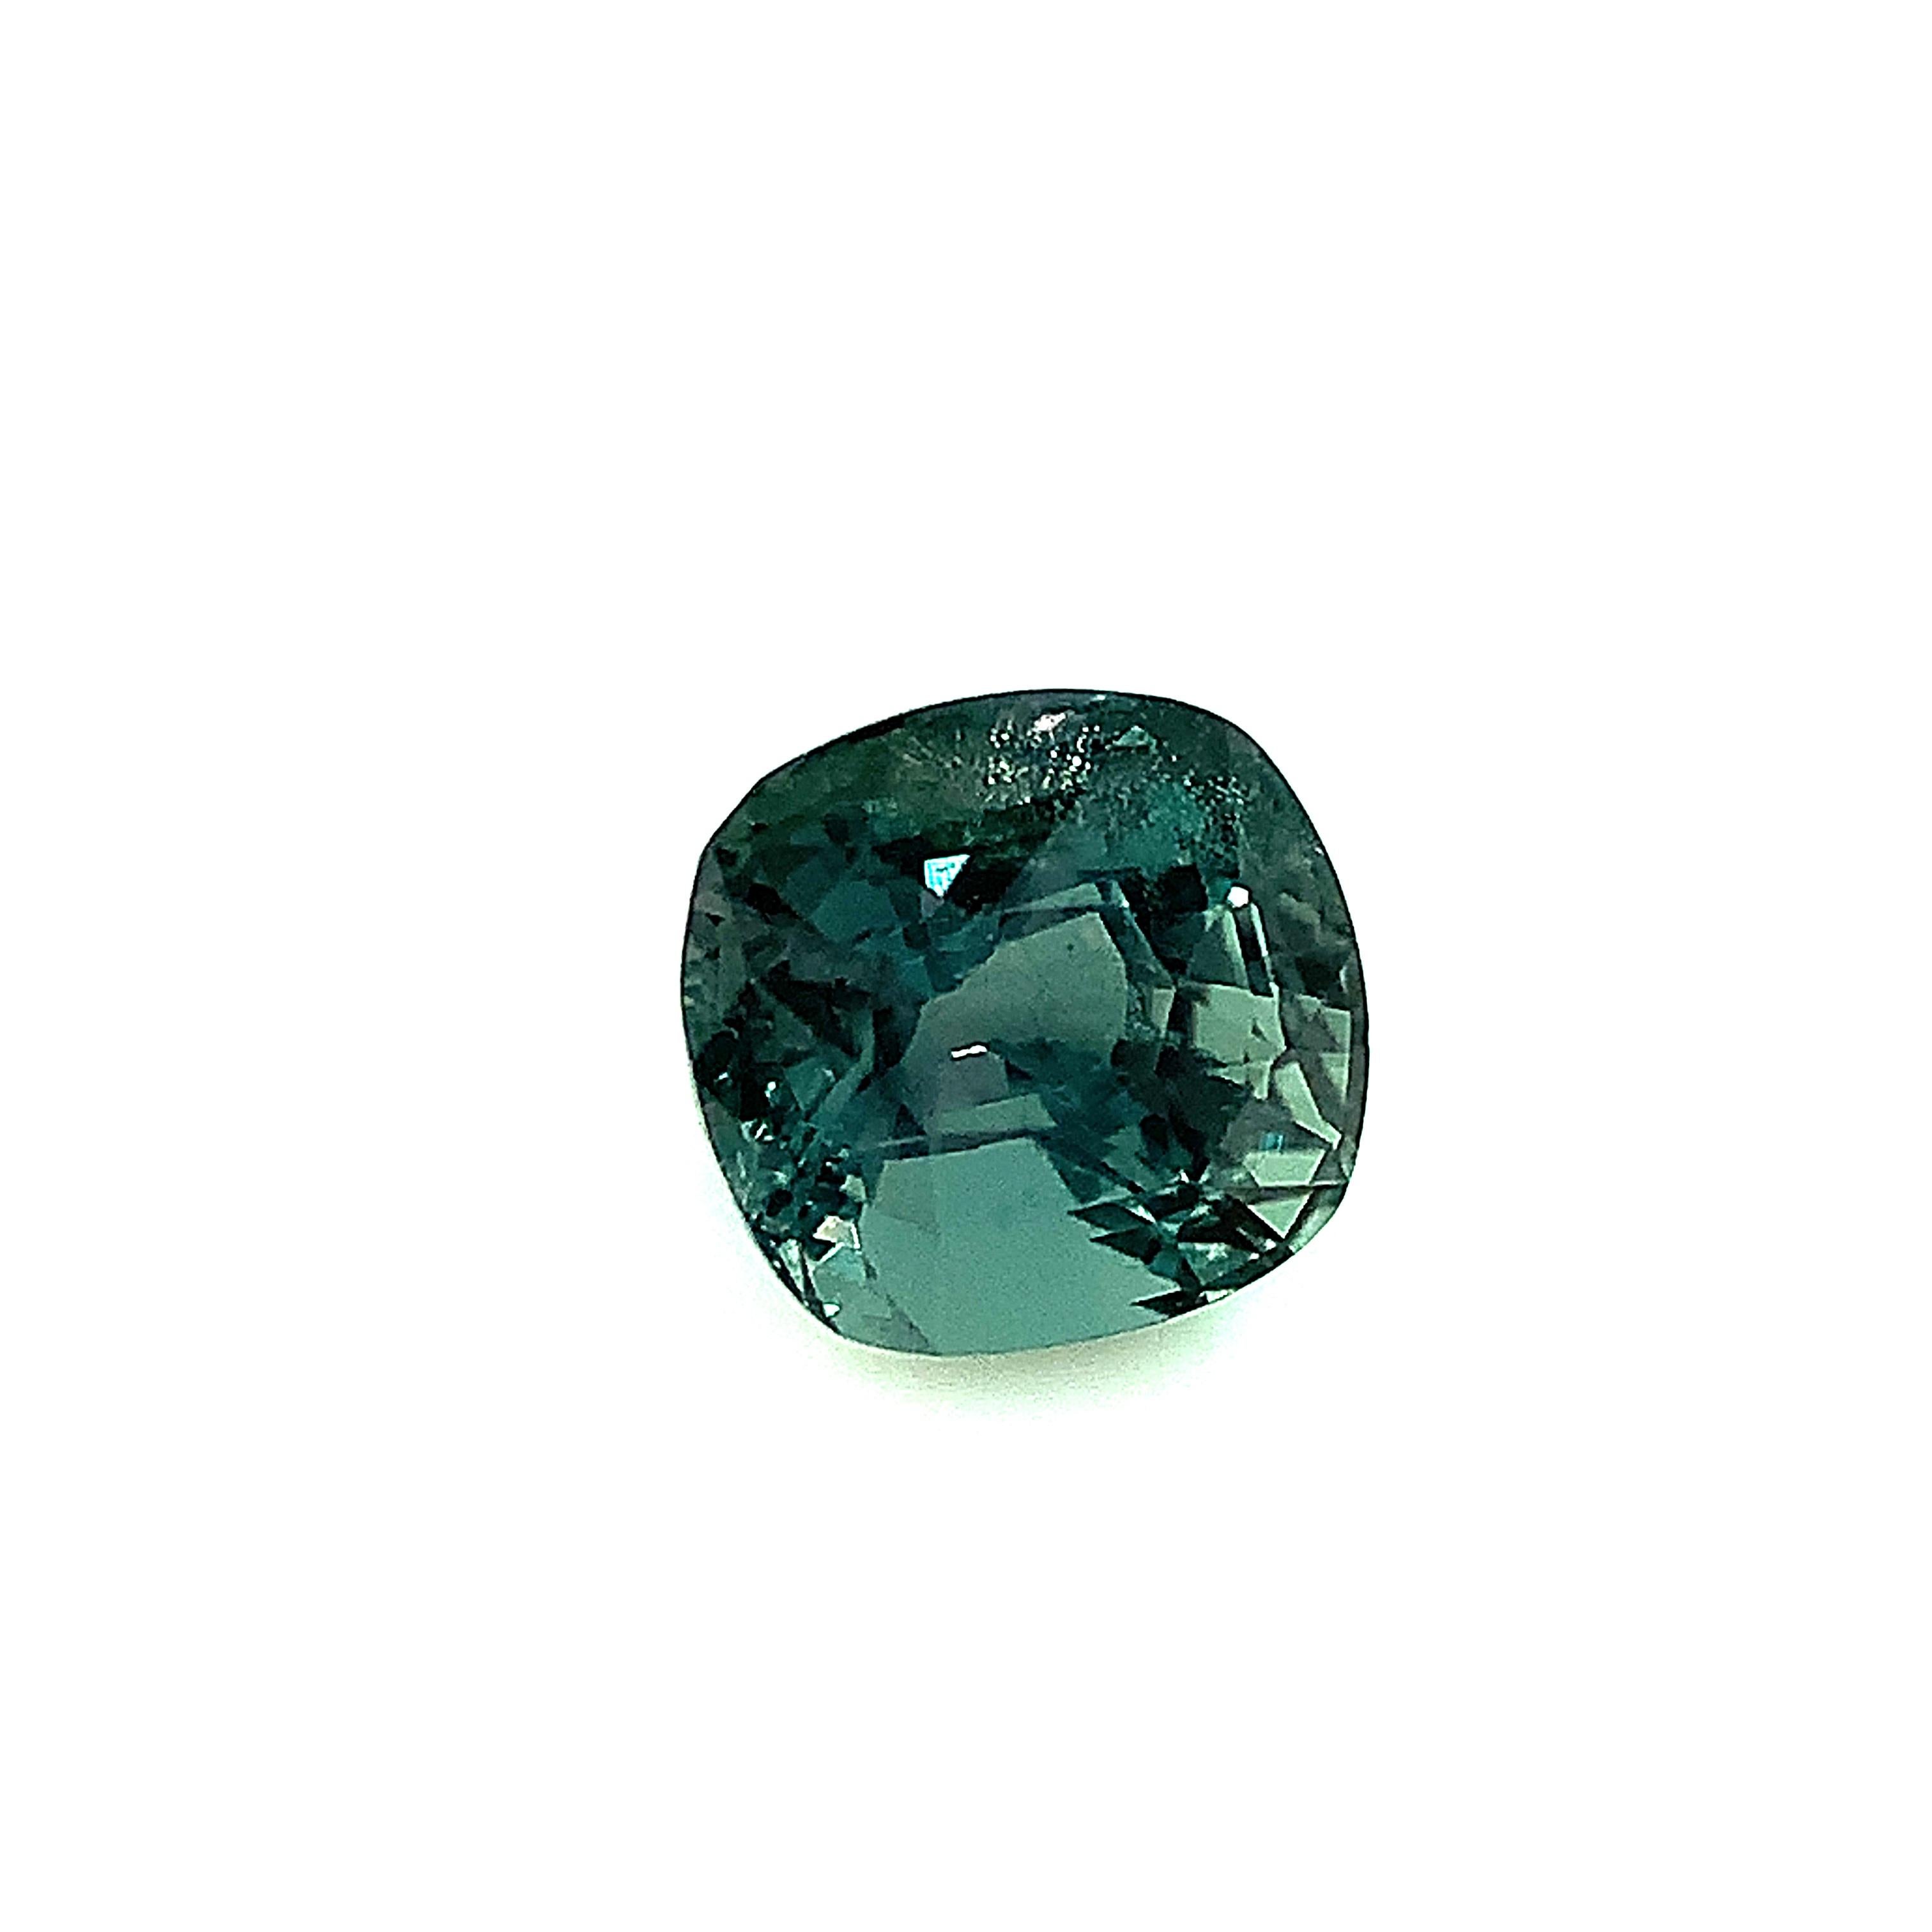 Pierre précieuse non sertie d'Alexandrite chrysobéryl de 1,16 carat, certifiée GIA - RTP Unisexe en vente